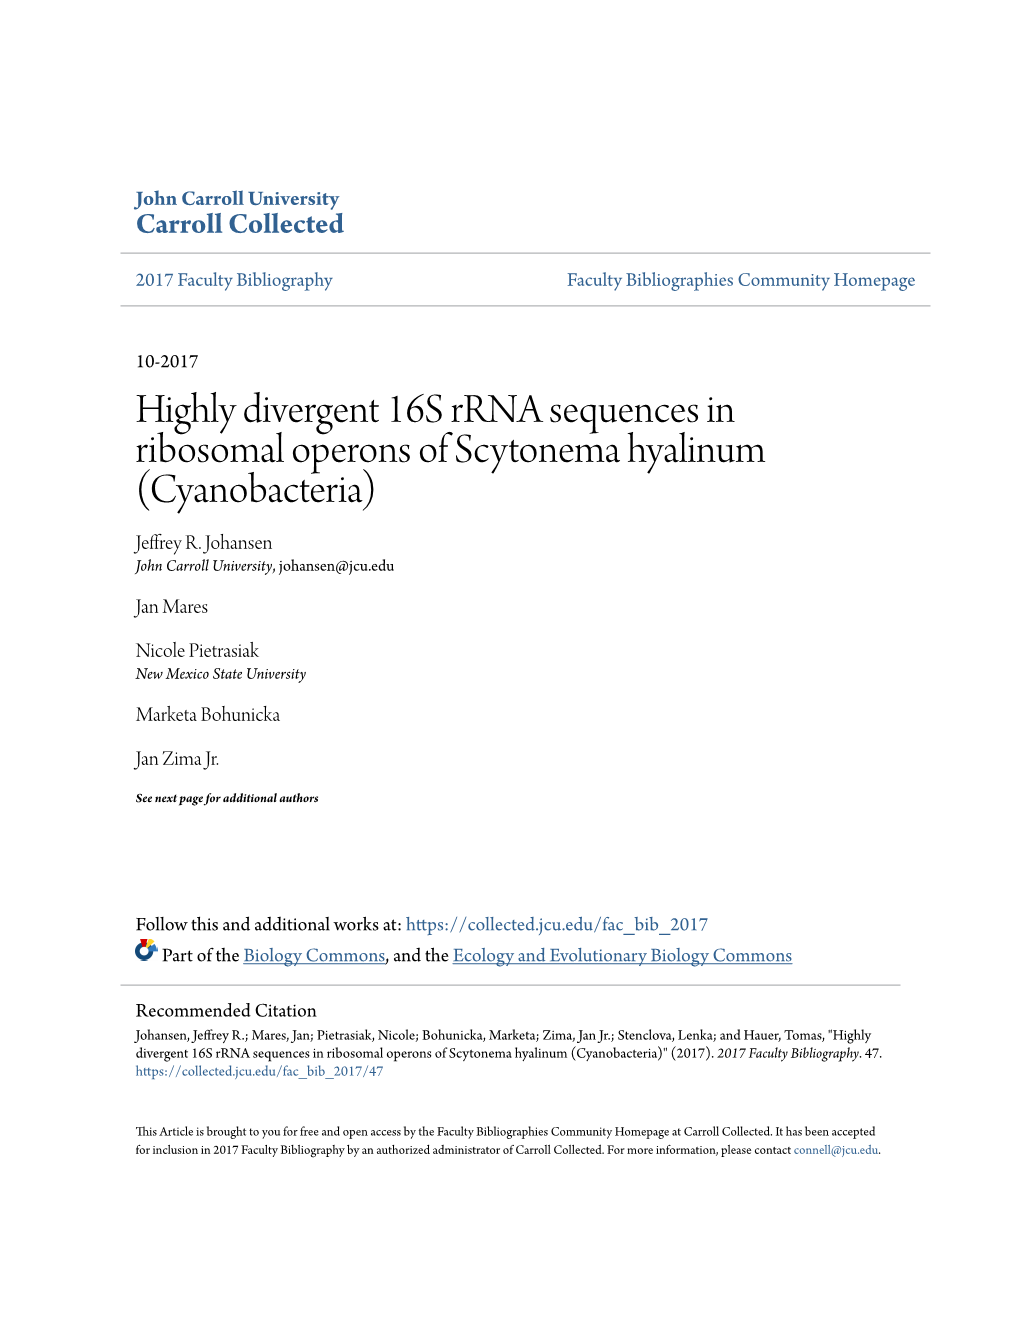 Highly Divergent 16S Rrna Sequences in Ribosomal Operons of Scytonema Hyalinum (Cyanobacteria) Jeffrey R